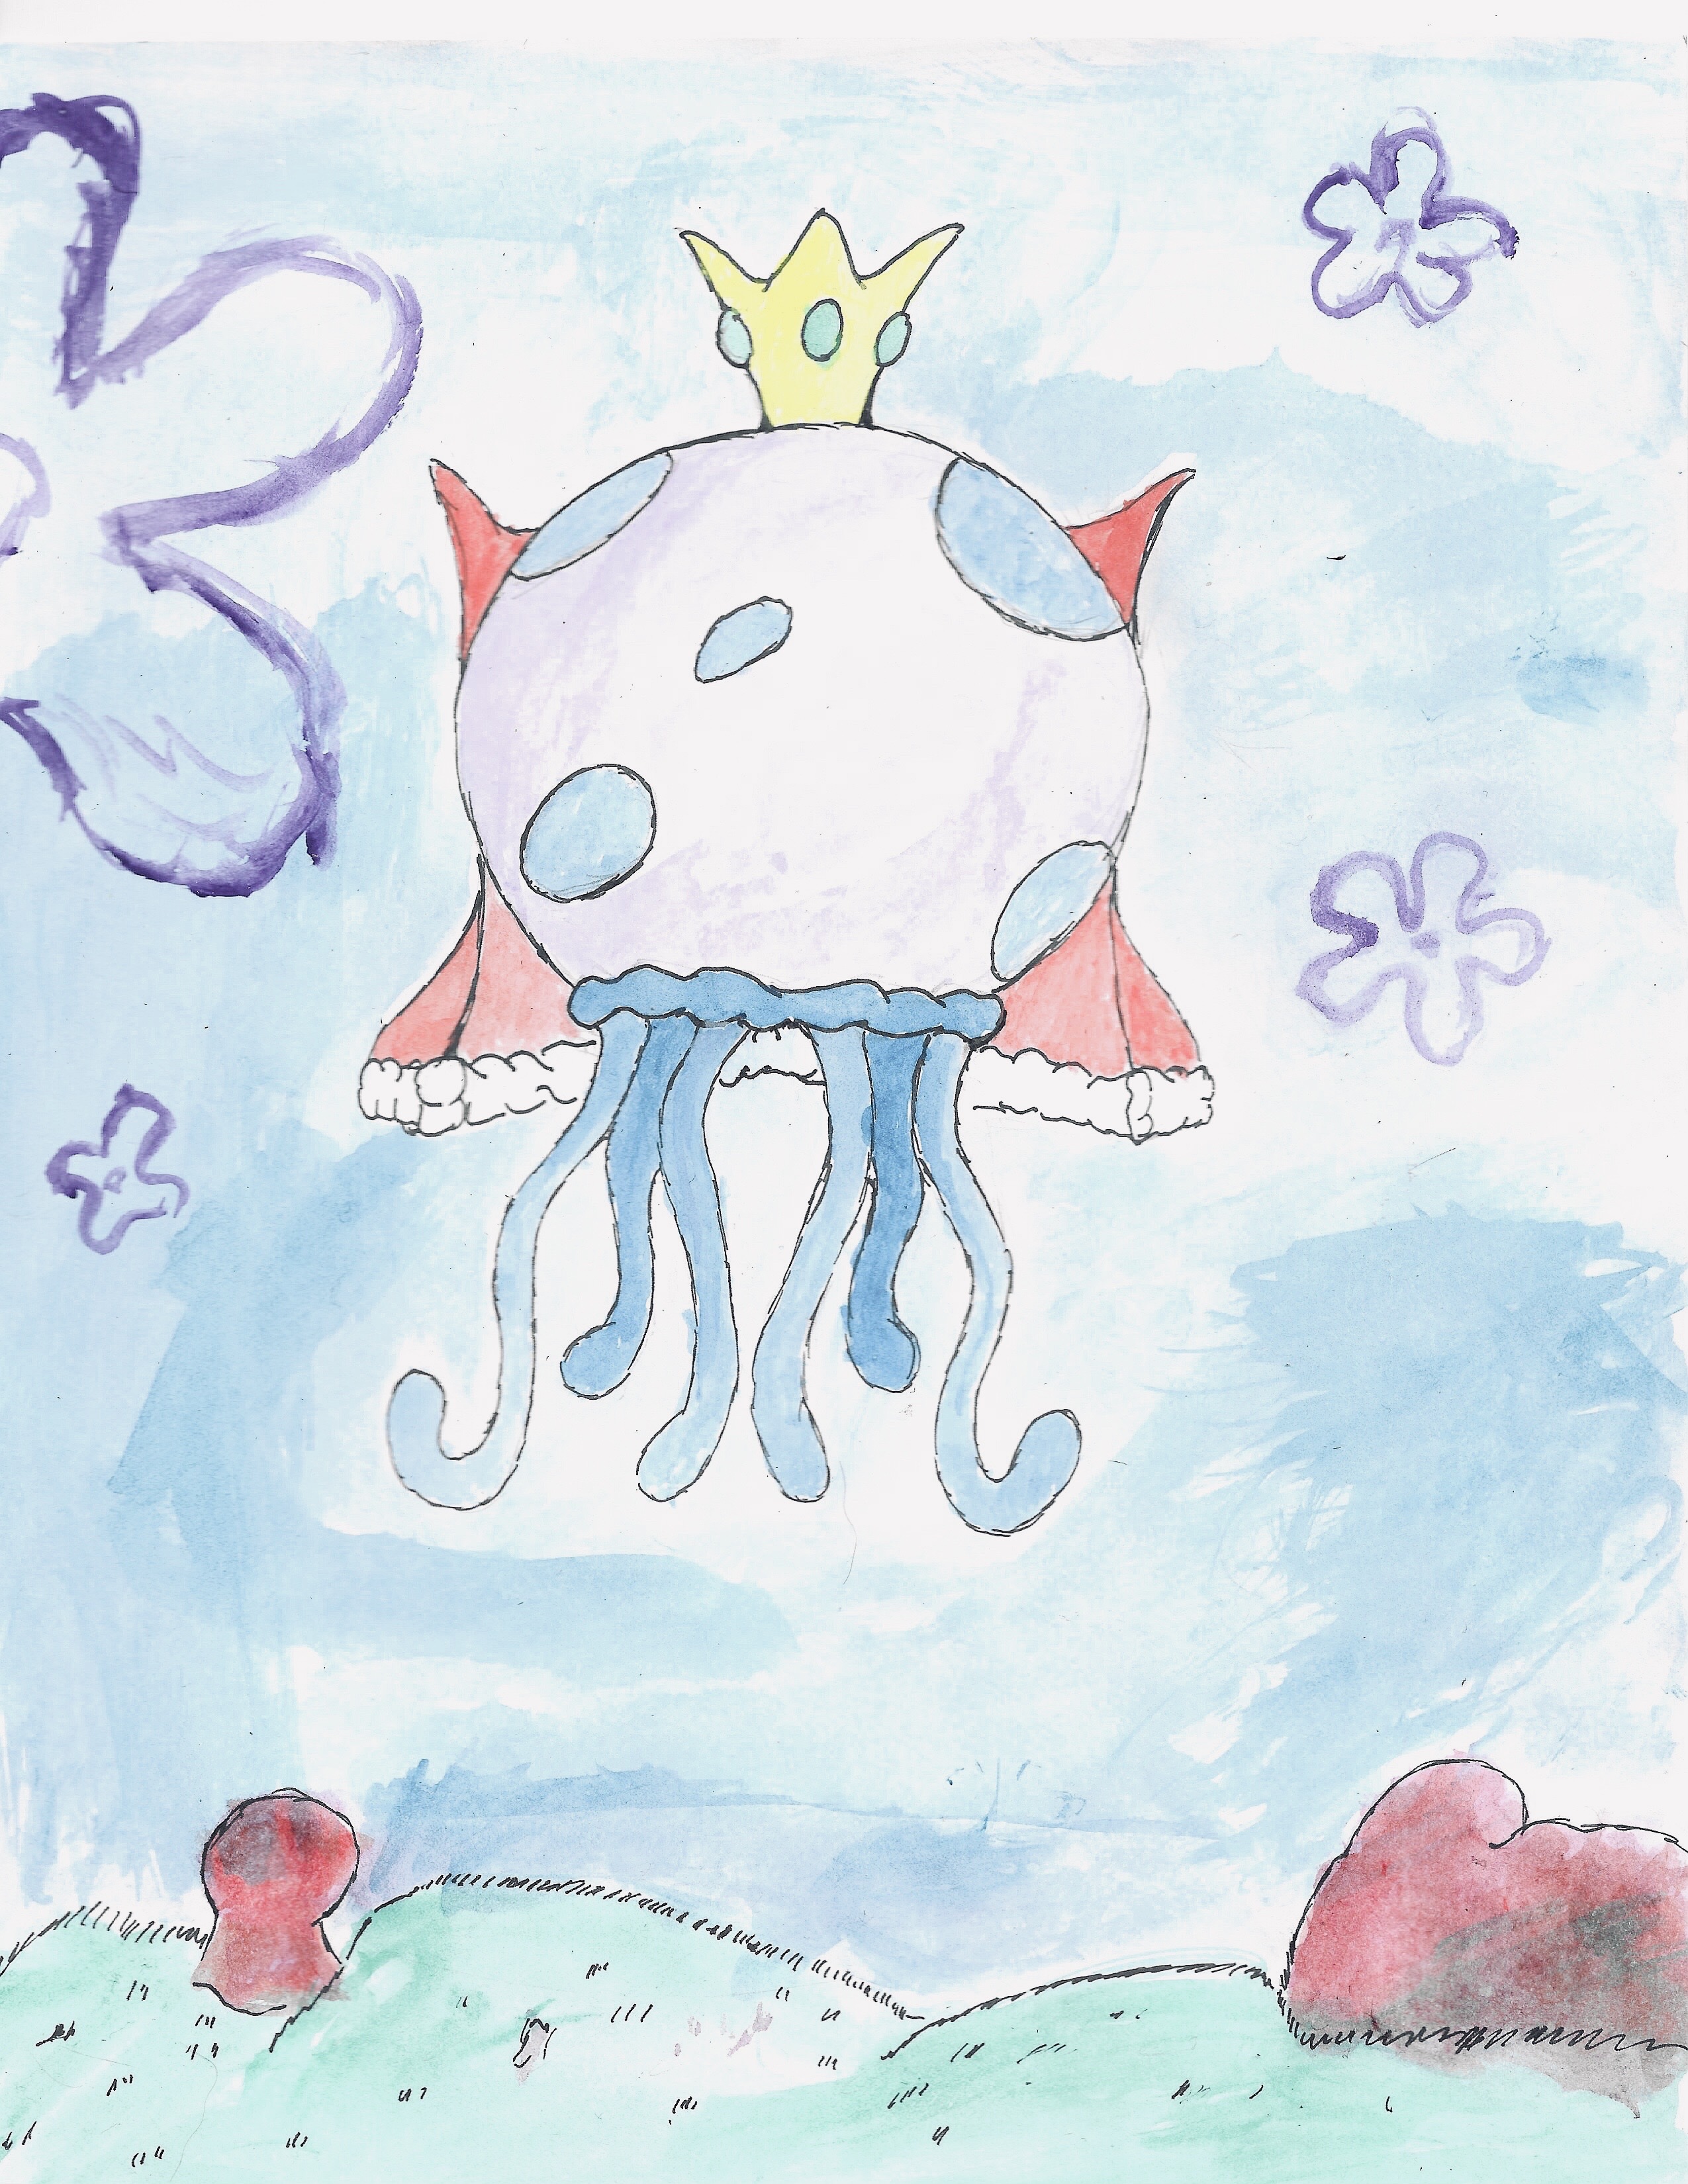 spongebob king jellyfish by gman906 on DeviantArt